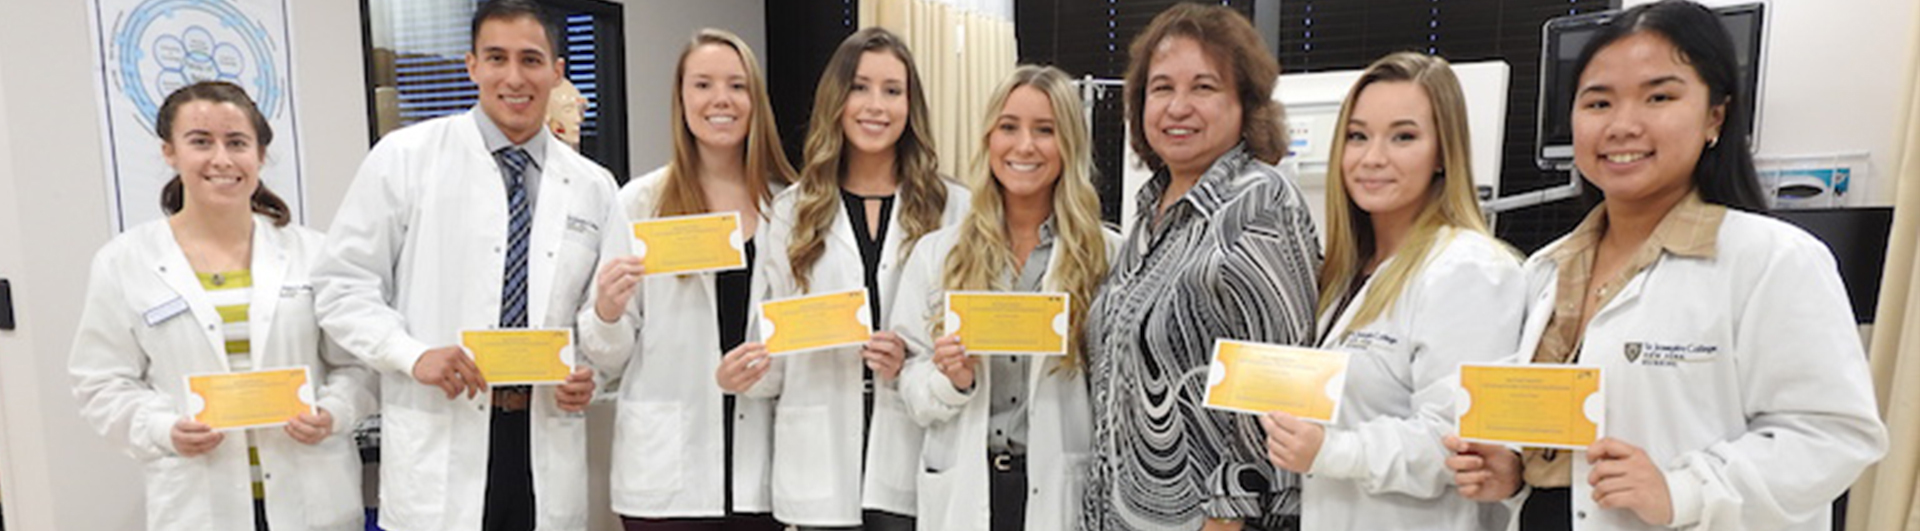 SJC Long Island students holding their golden ticket to Northwell Health's prestigious event.